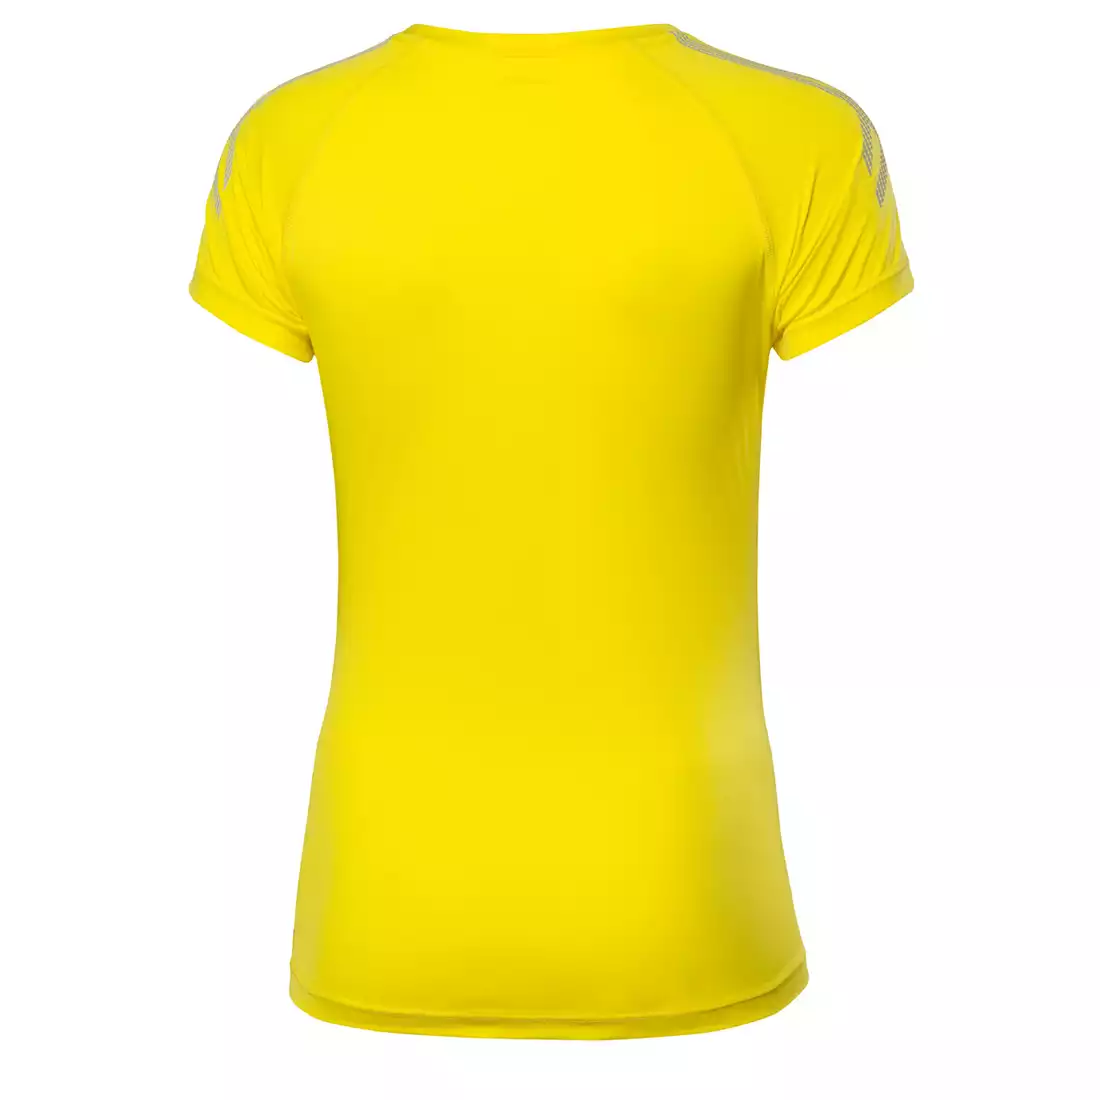 ASICS 339907-0343 TIGER TEE - damska koszulka do biegania, kolor: Żółty